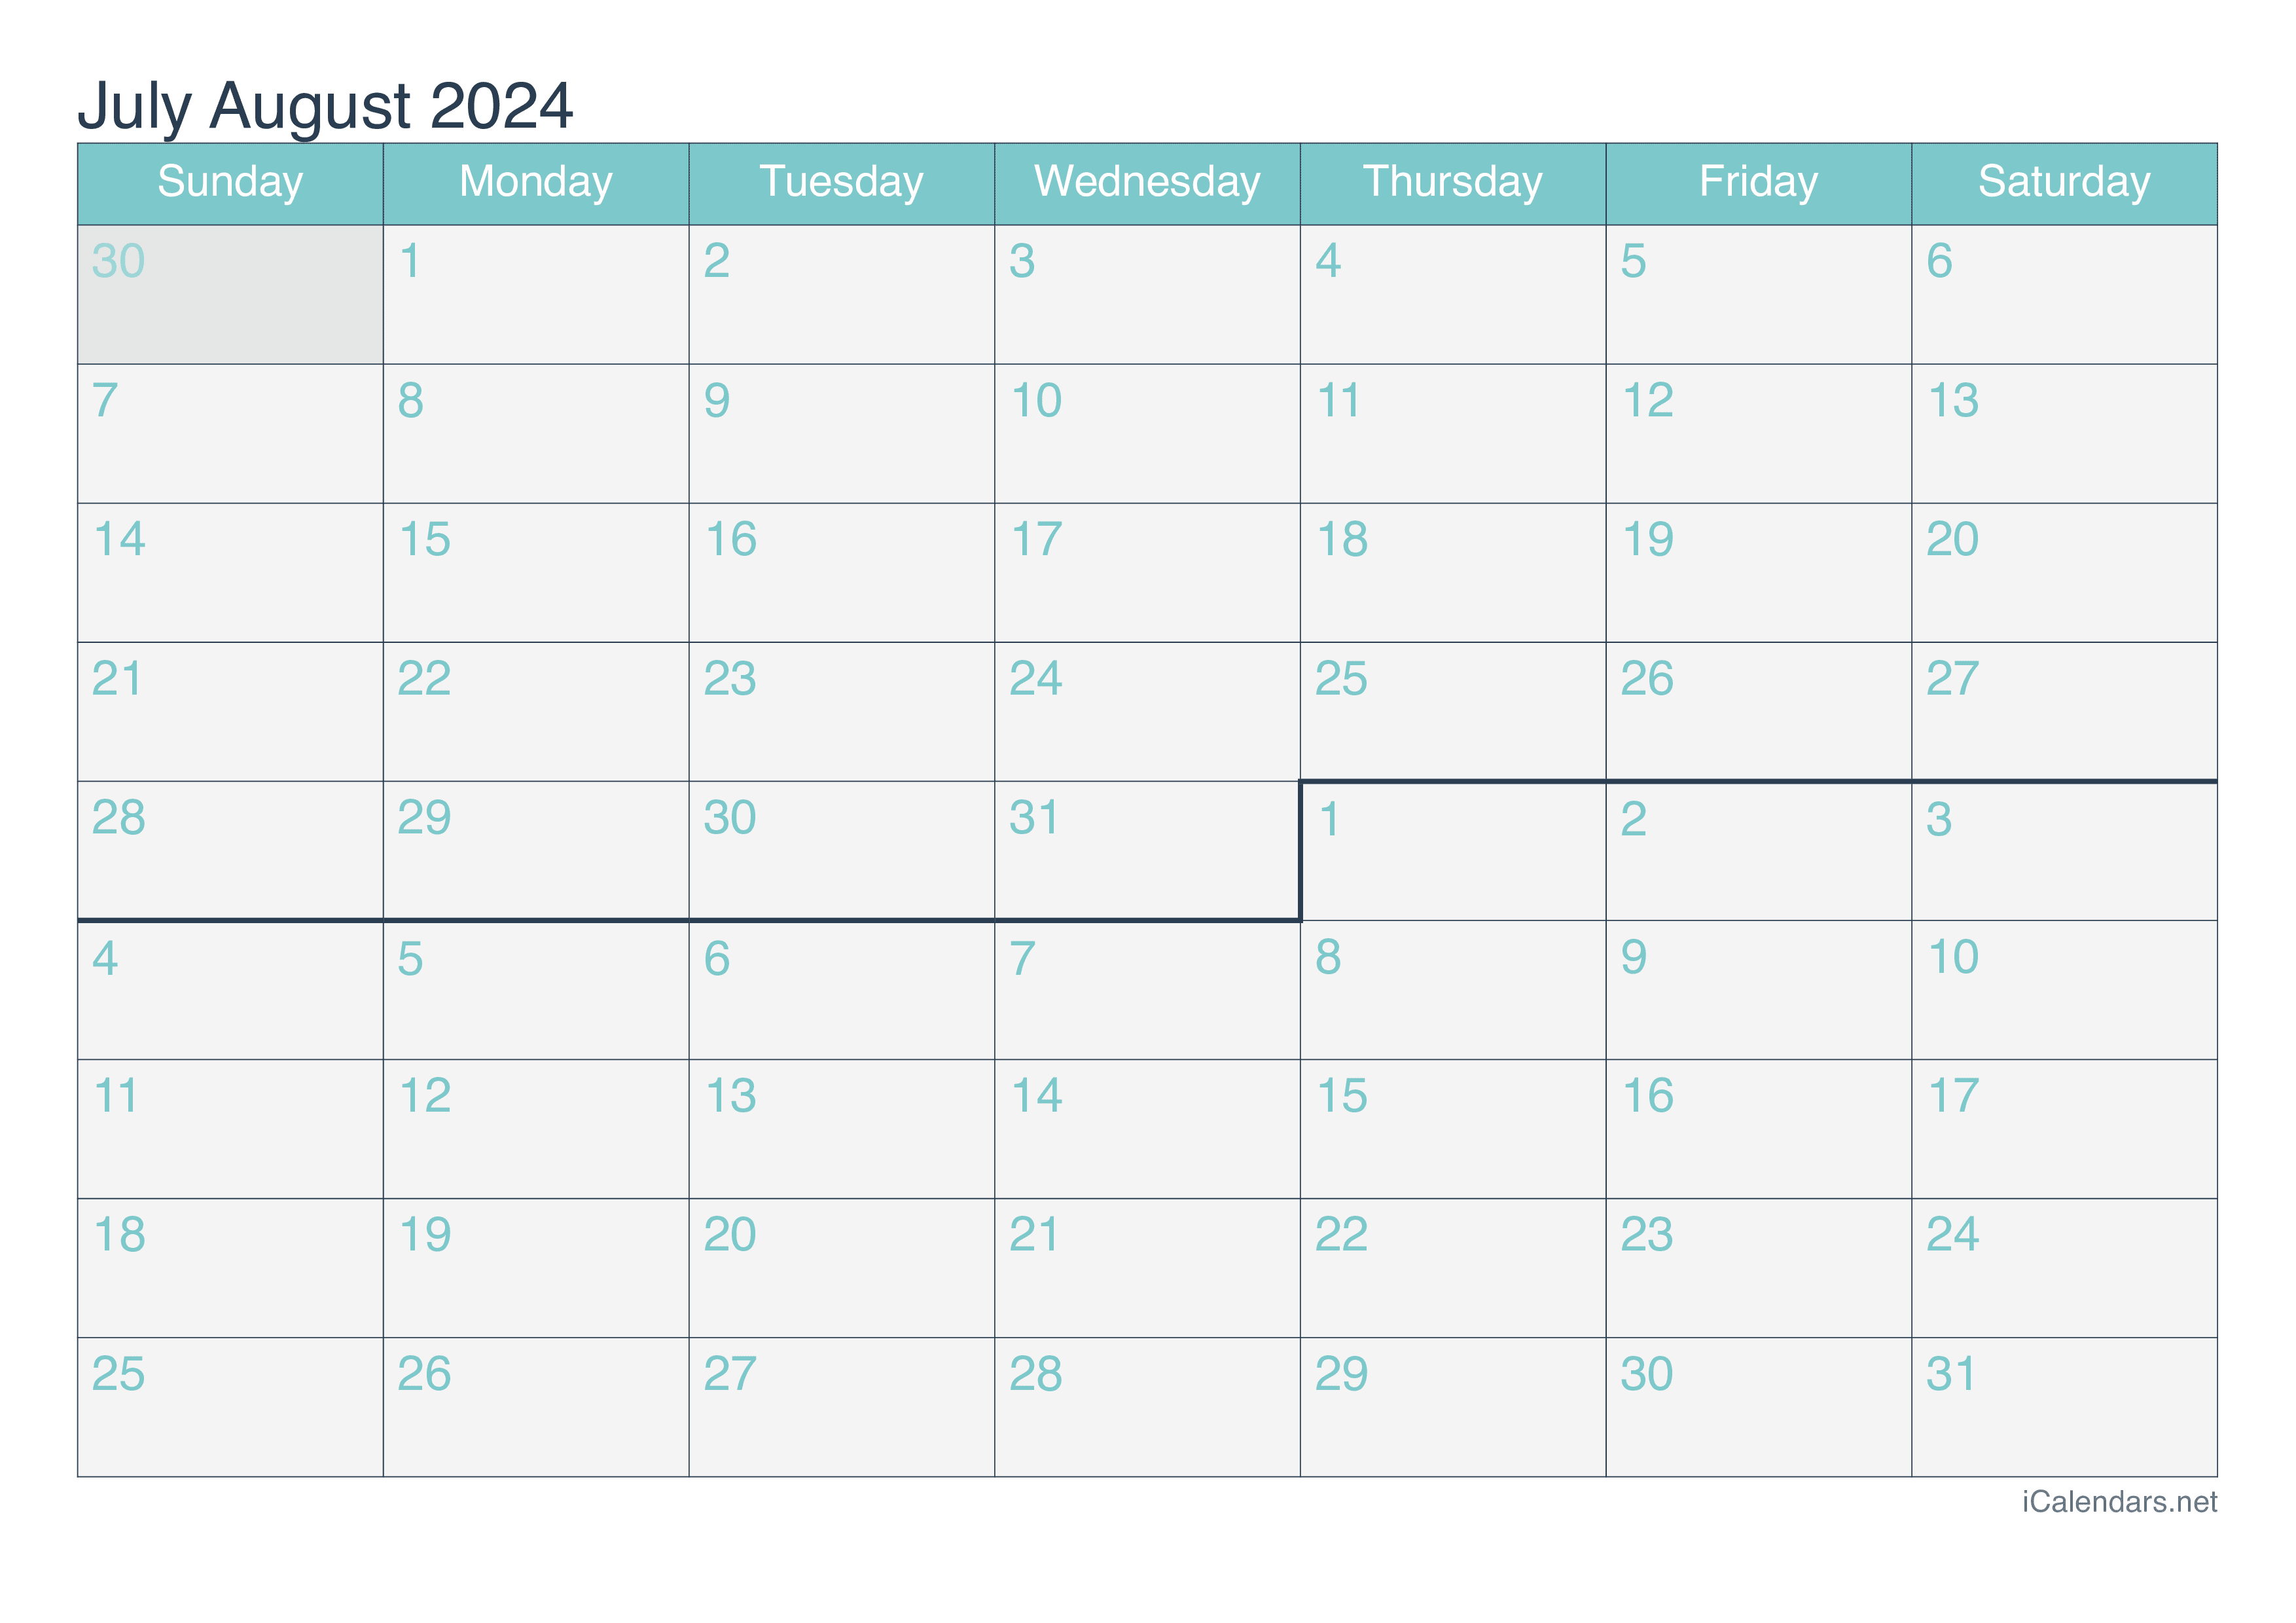 July And August 2024 Printable Calendar regarding July August 2024 Calendar